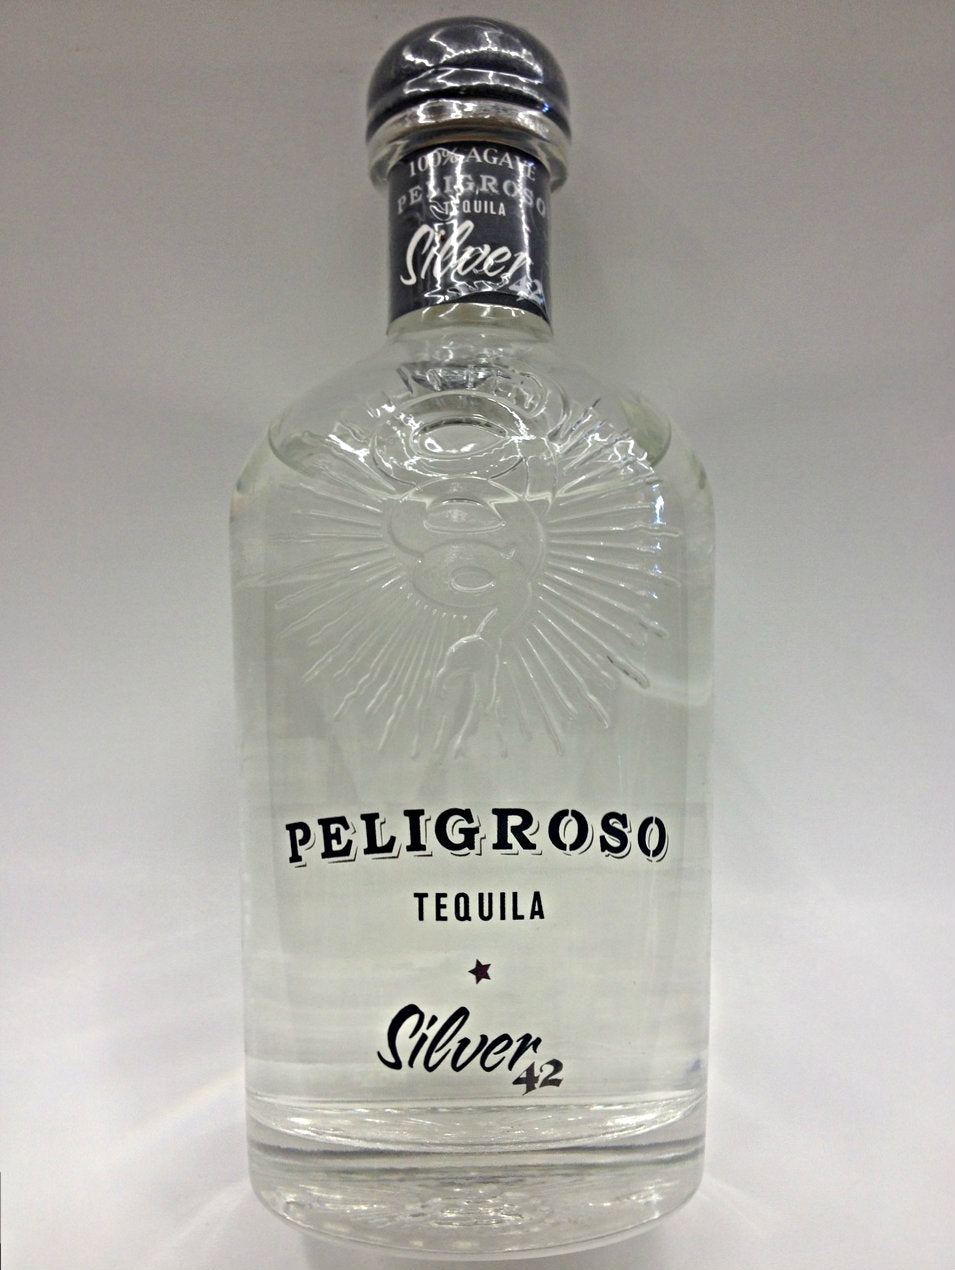 Peligroso Silver 42 750ml - Peligroso Tequila